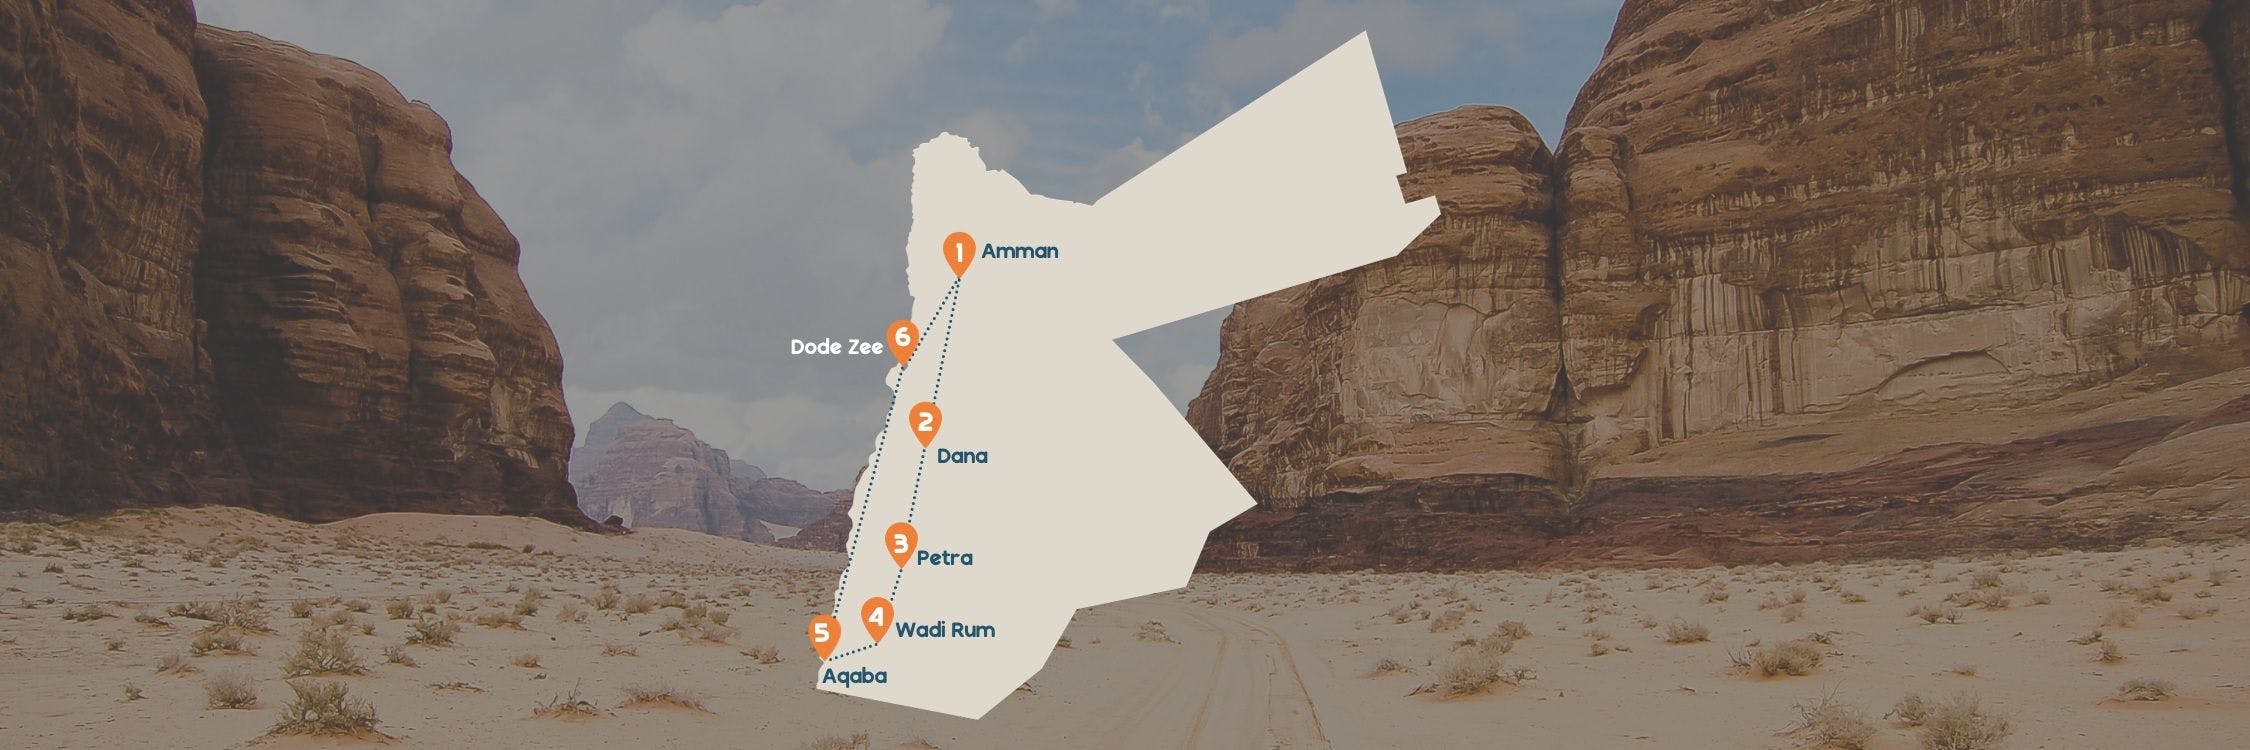 routekaart desktop jordanië bucketlist reis